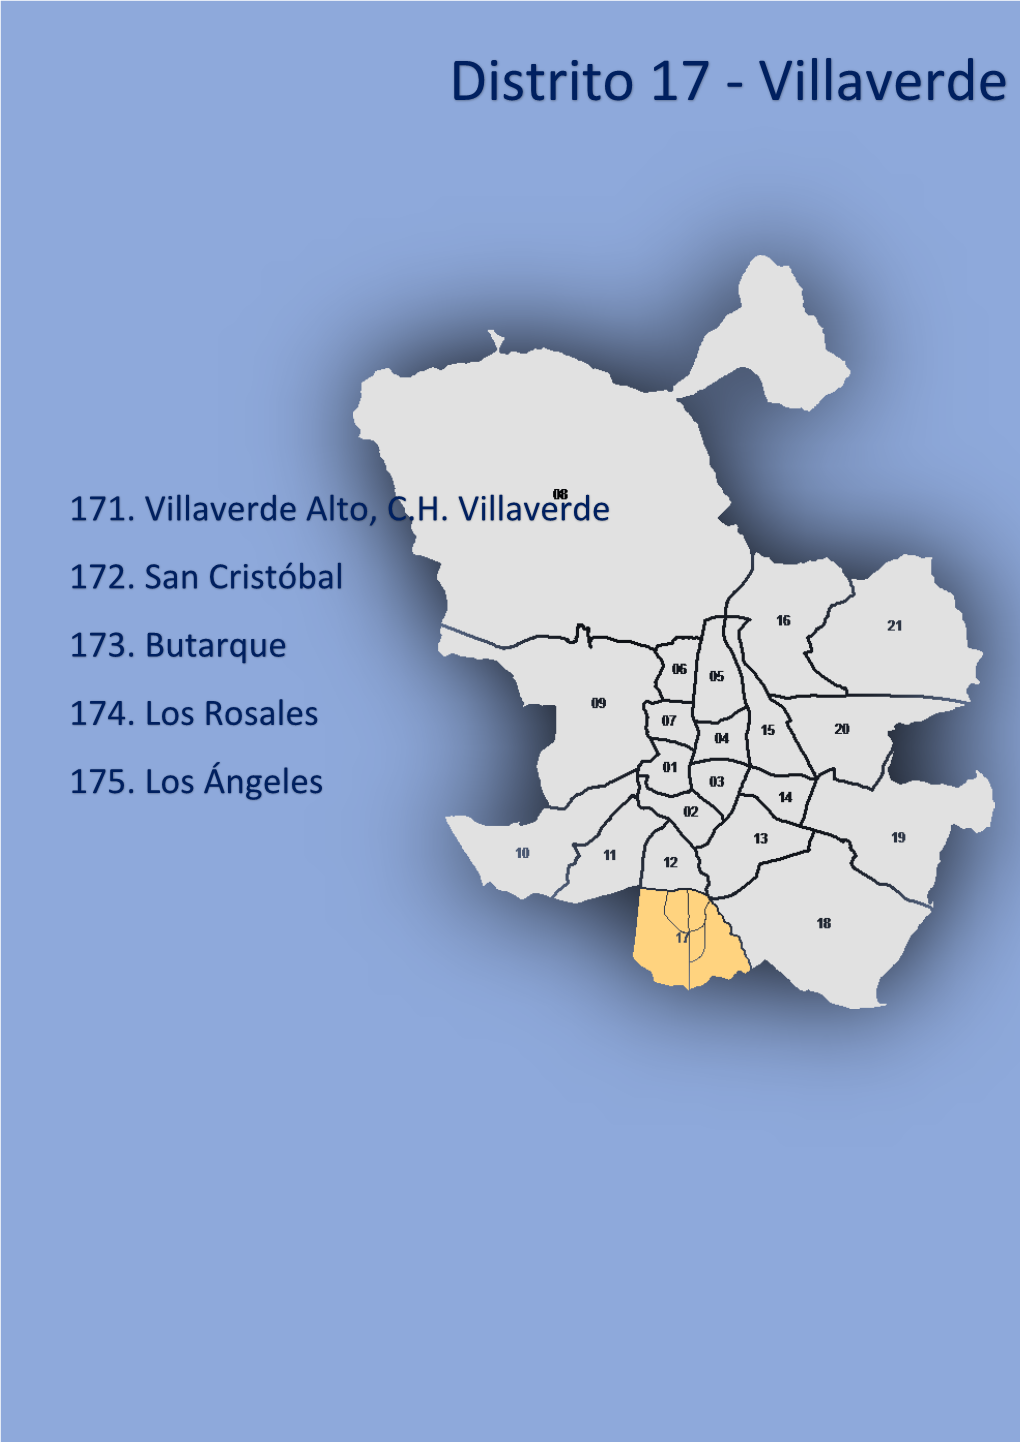 Distrito 17 - Villaverde